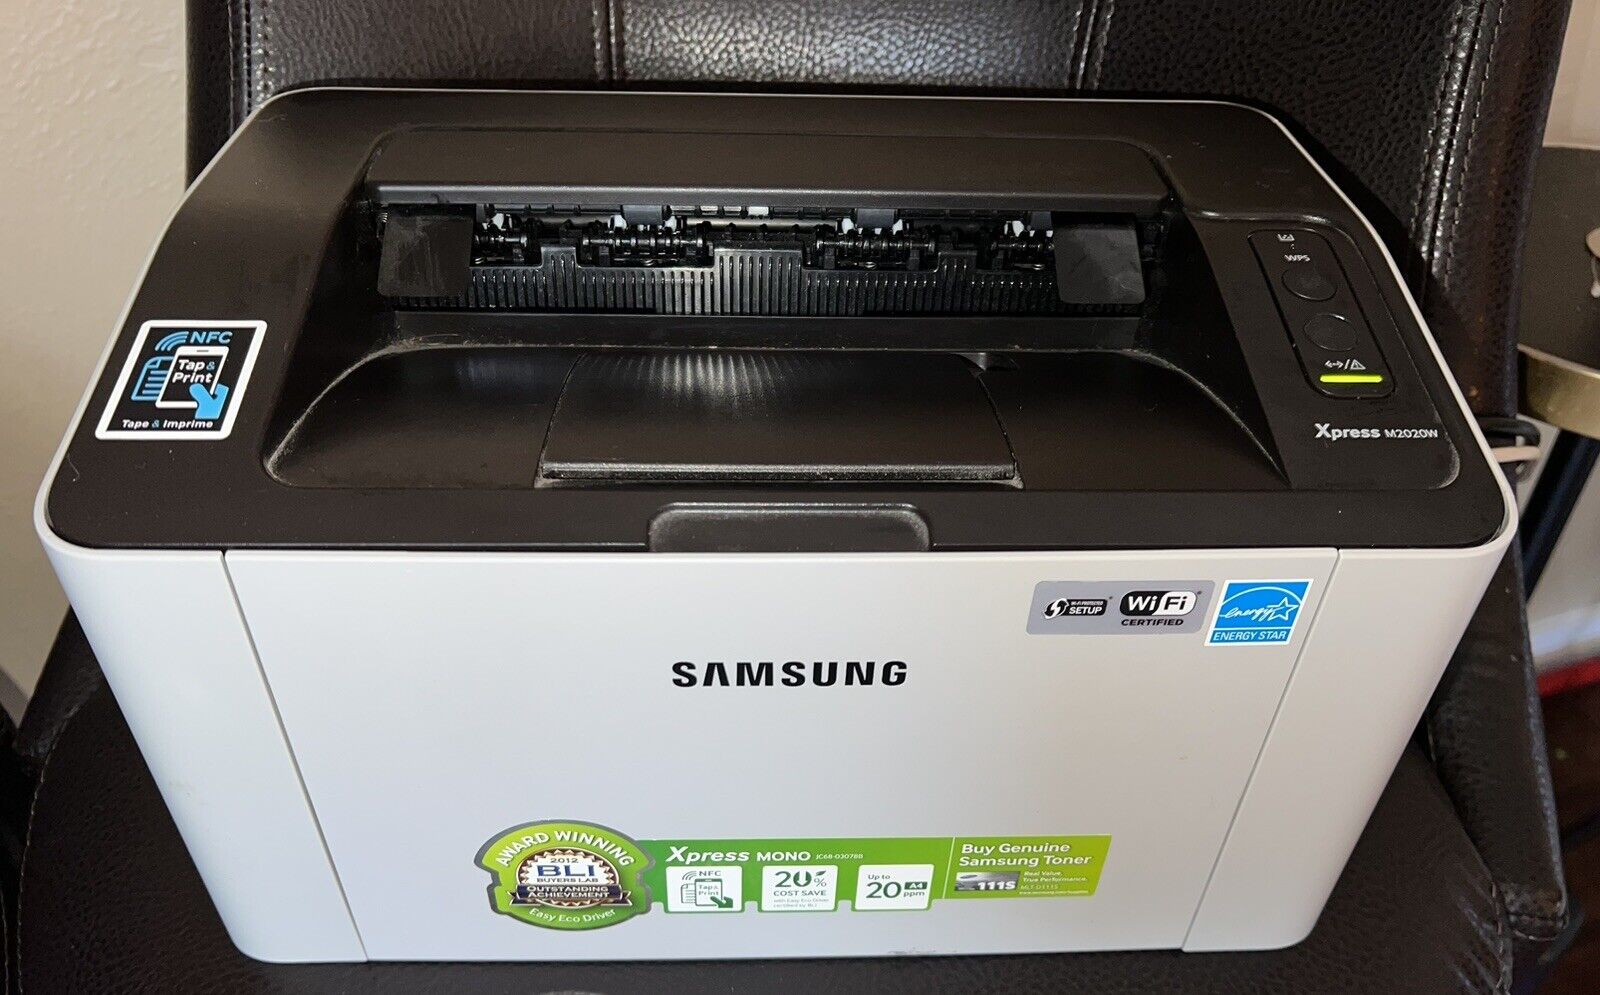 Samsung Express M2020w Printer Express Mono. Wifi Tap And Print. Printer 